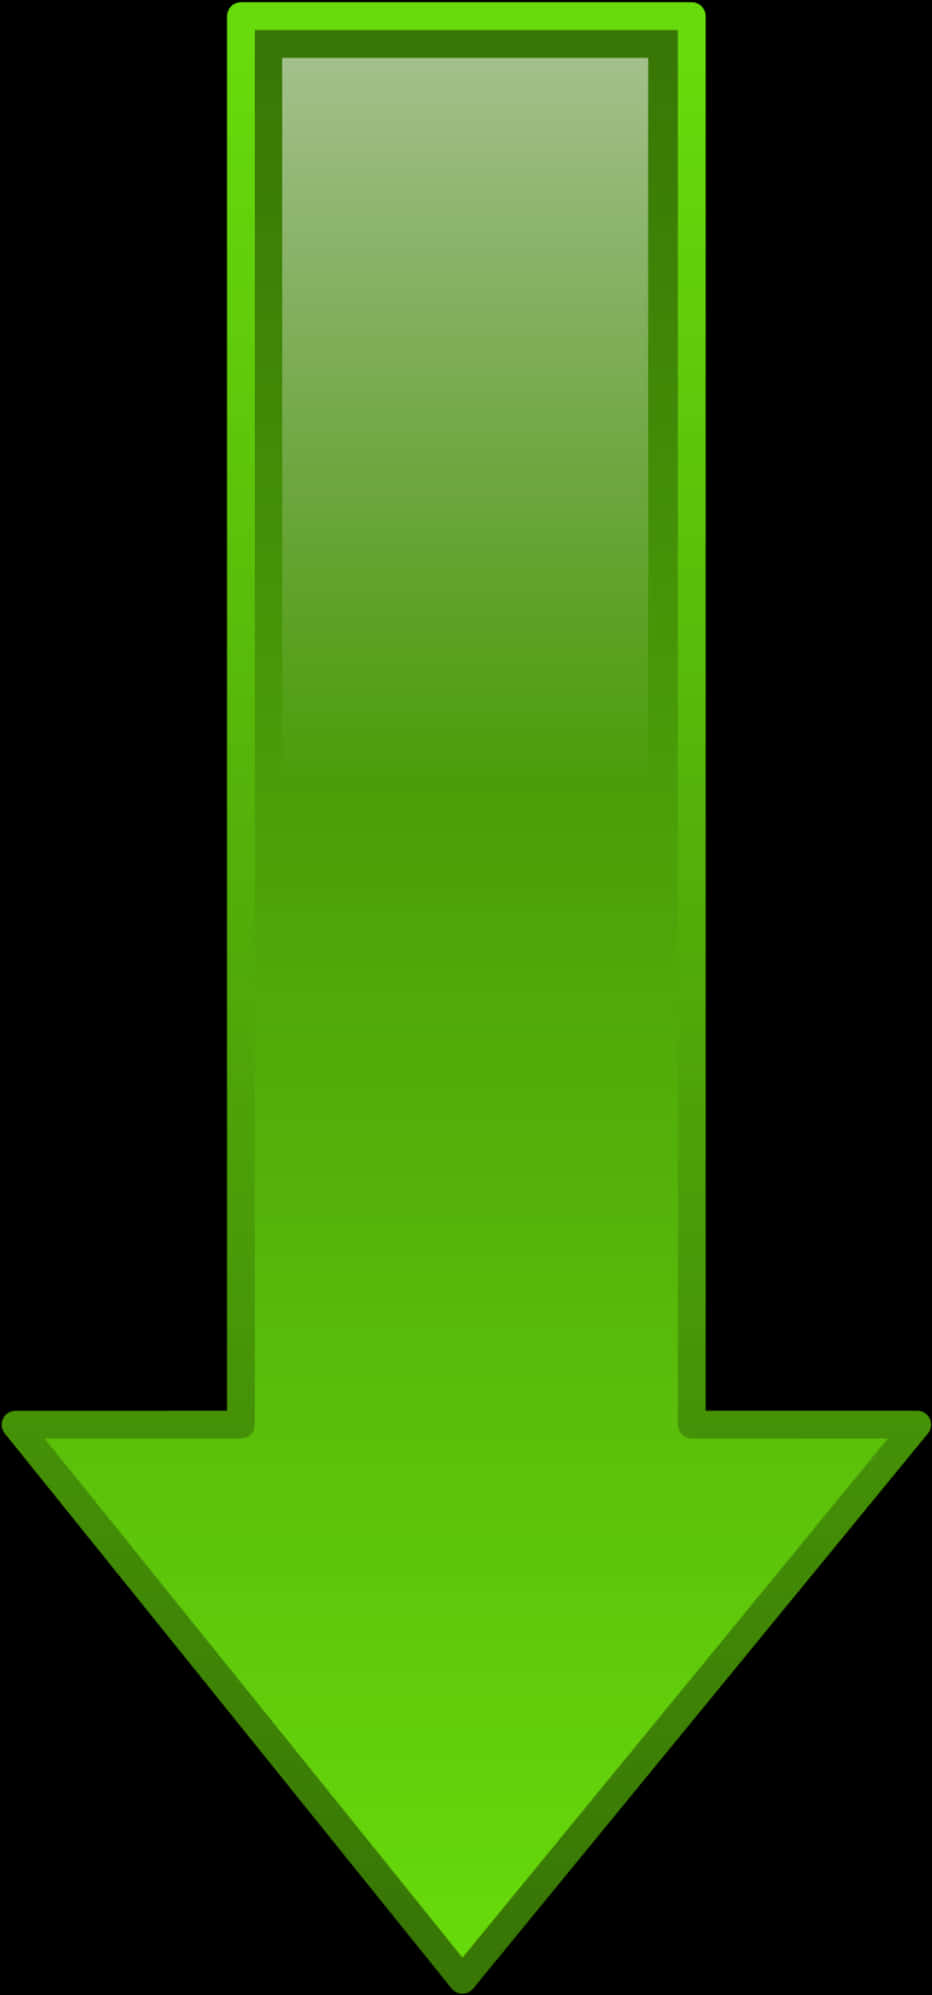 Green Downward Arrow Transparent Background